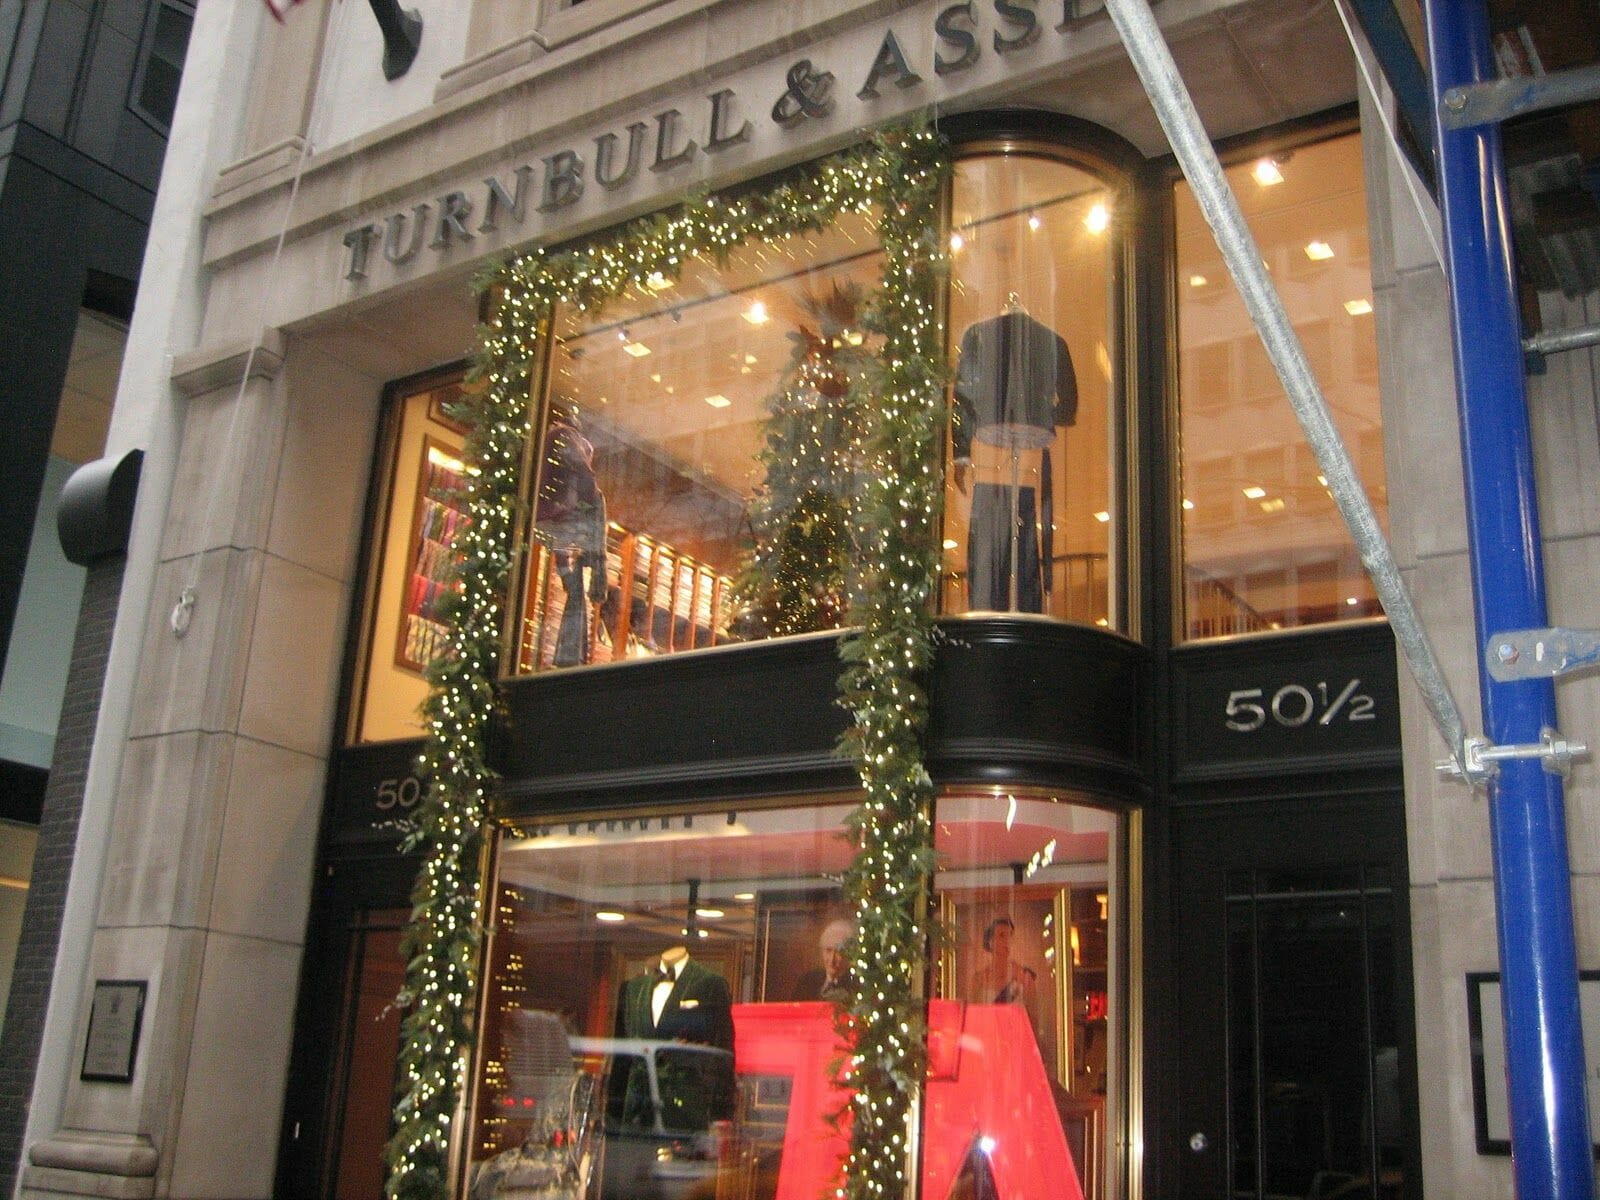 The New York City storefront of Turnbull & Asser.